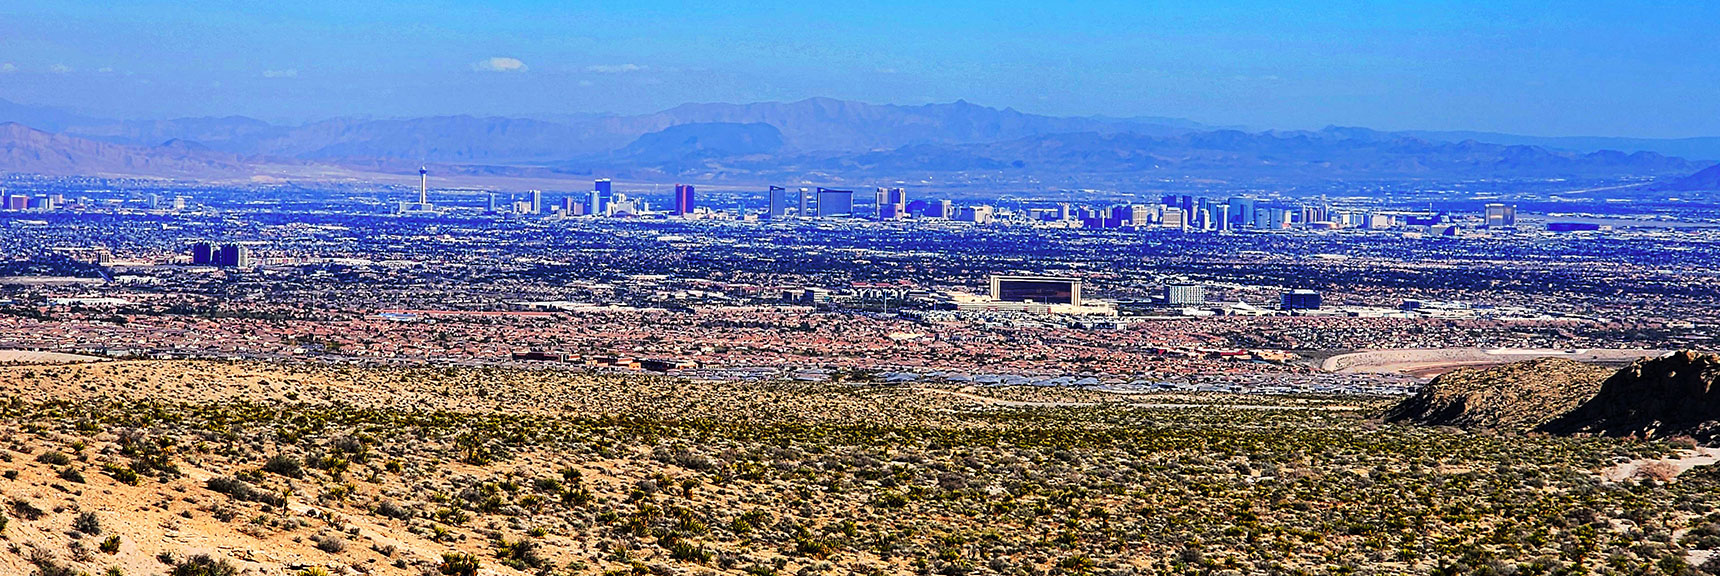 Larger View of Vegas Strip. Arizona Mt. Wilson High Peak Beyond. | Gray Cap Ridge / Brownstone Basin Loop | La Madre Mountains Wilderness, Nevada